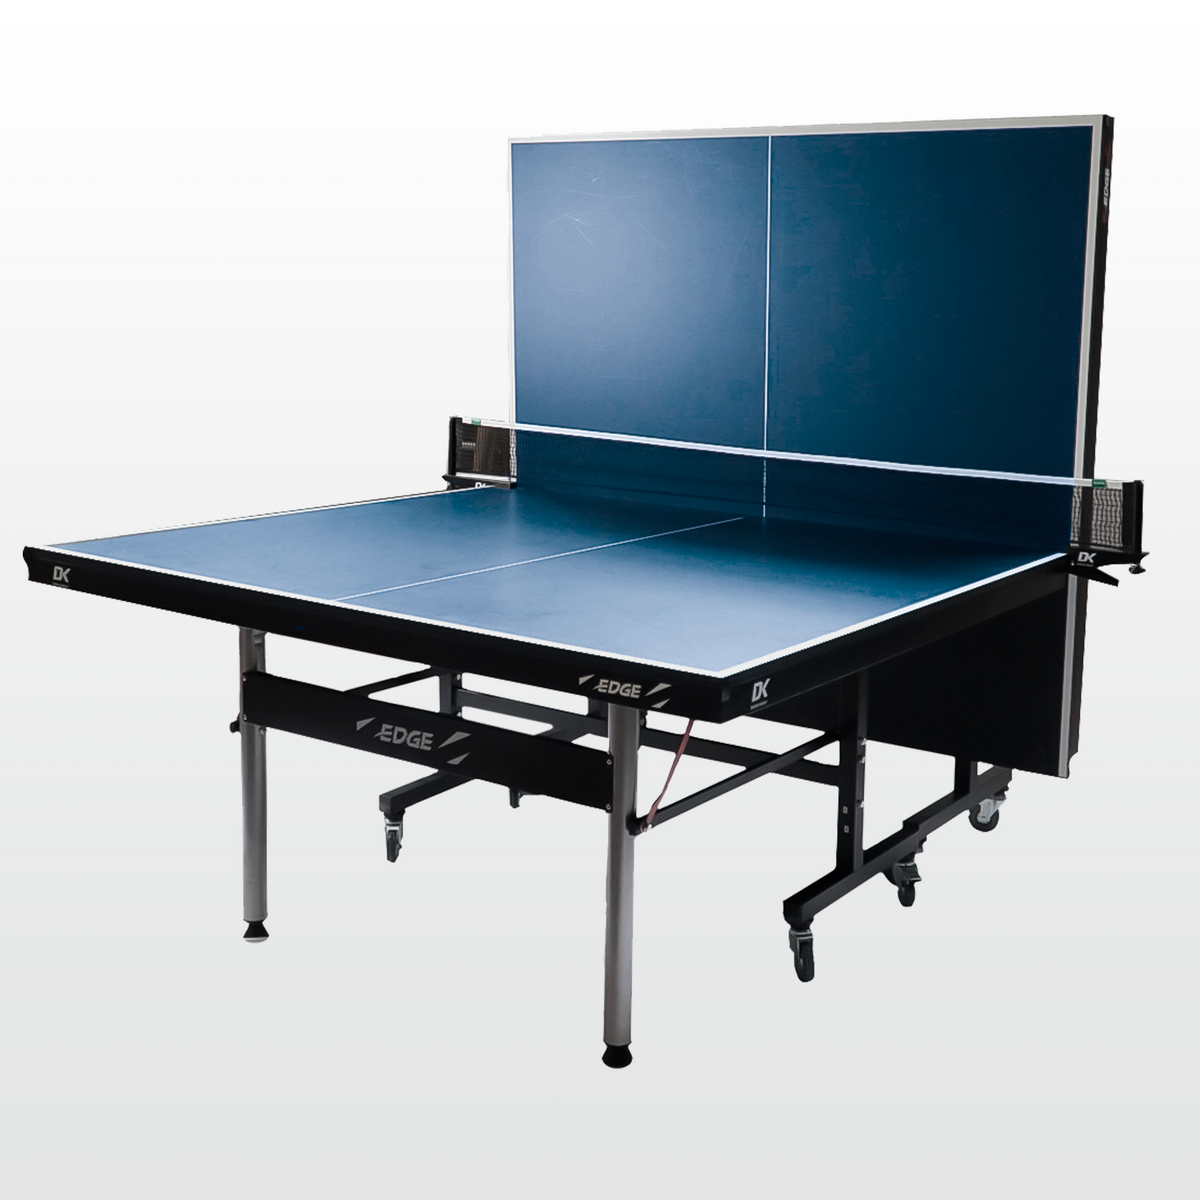 DK Edge 18mm Indoor Table Tennis Table - DK Sports